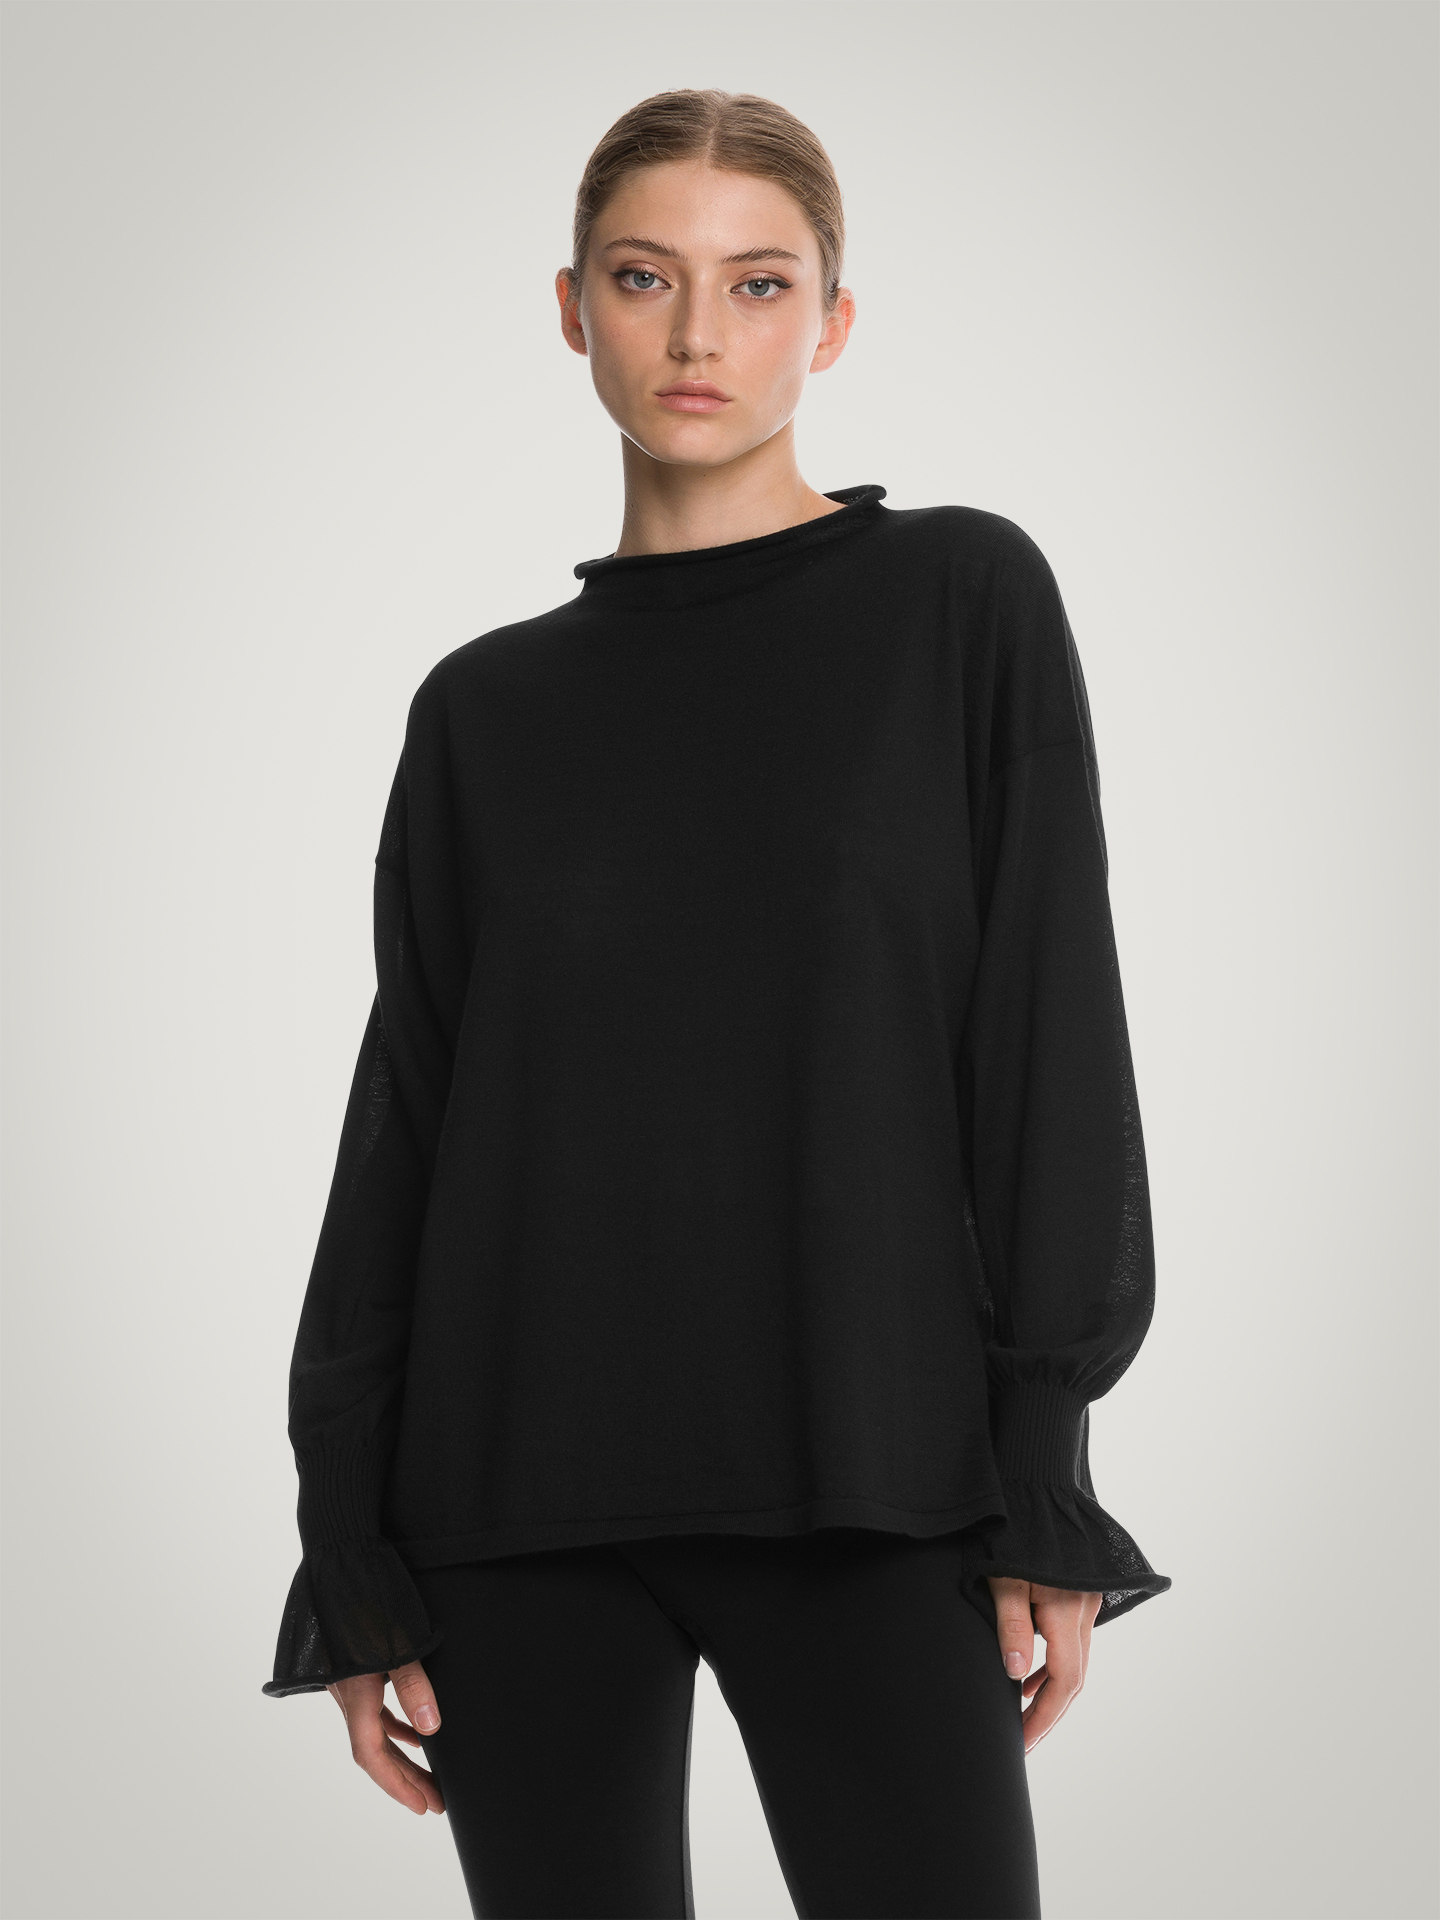 Wolford - Cashmere Loose Top Long Sleeve, Frau, black, Größe: S günstig online kaufen